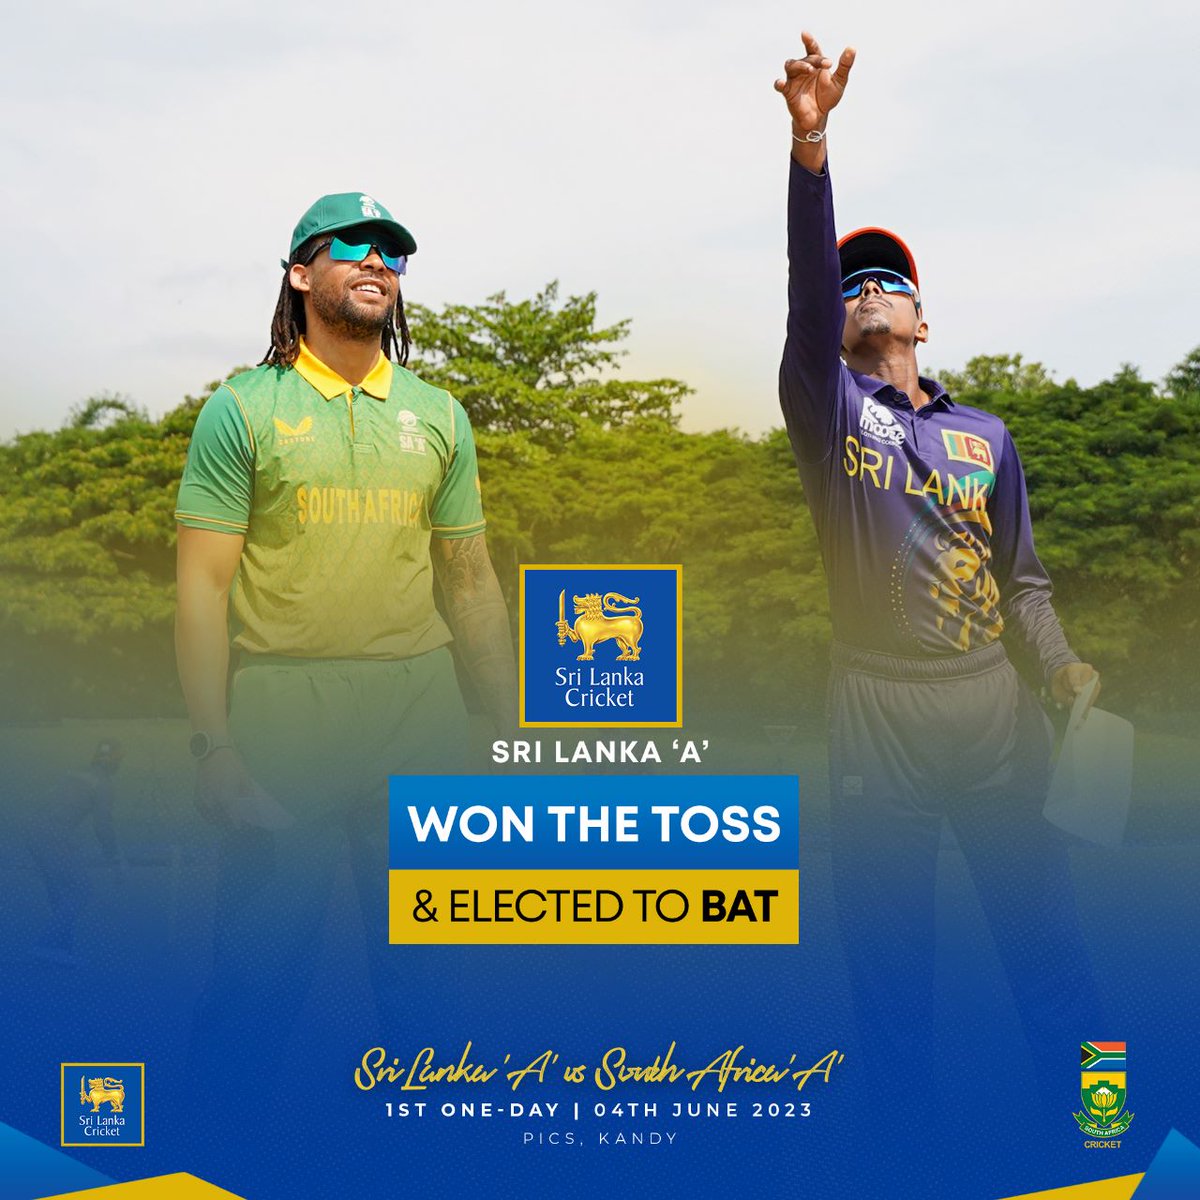 Sri Lanka 'A' won the toss and elected to bat first at PICS, Kandy.

#SLvSA #SLATeam